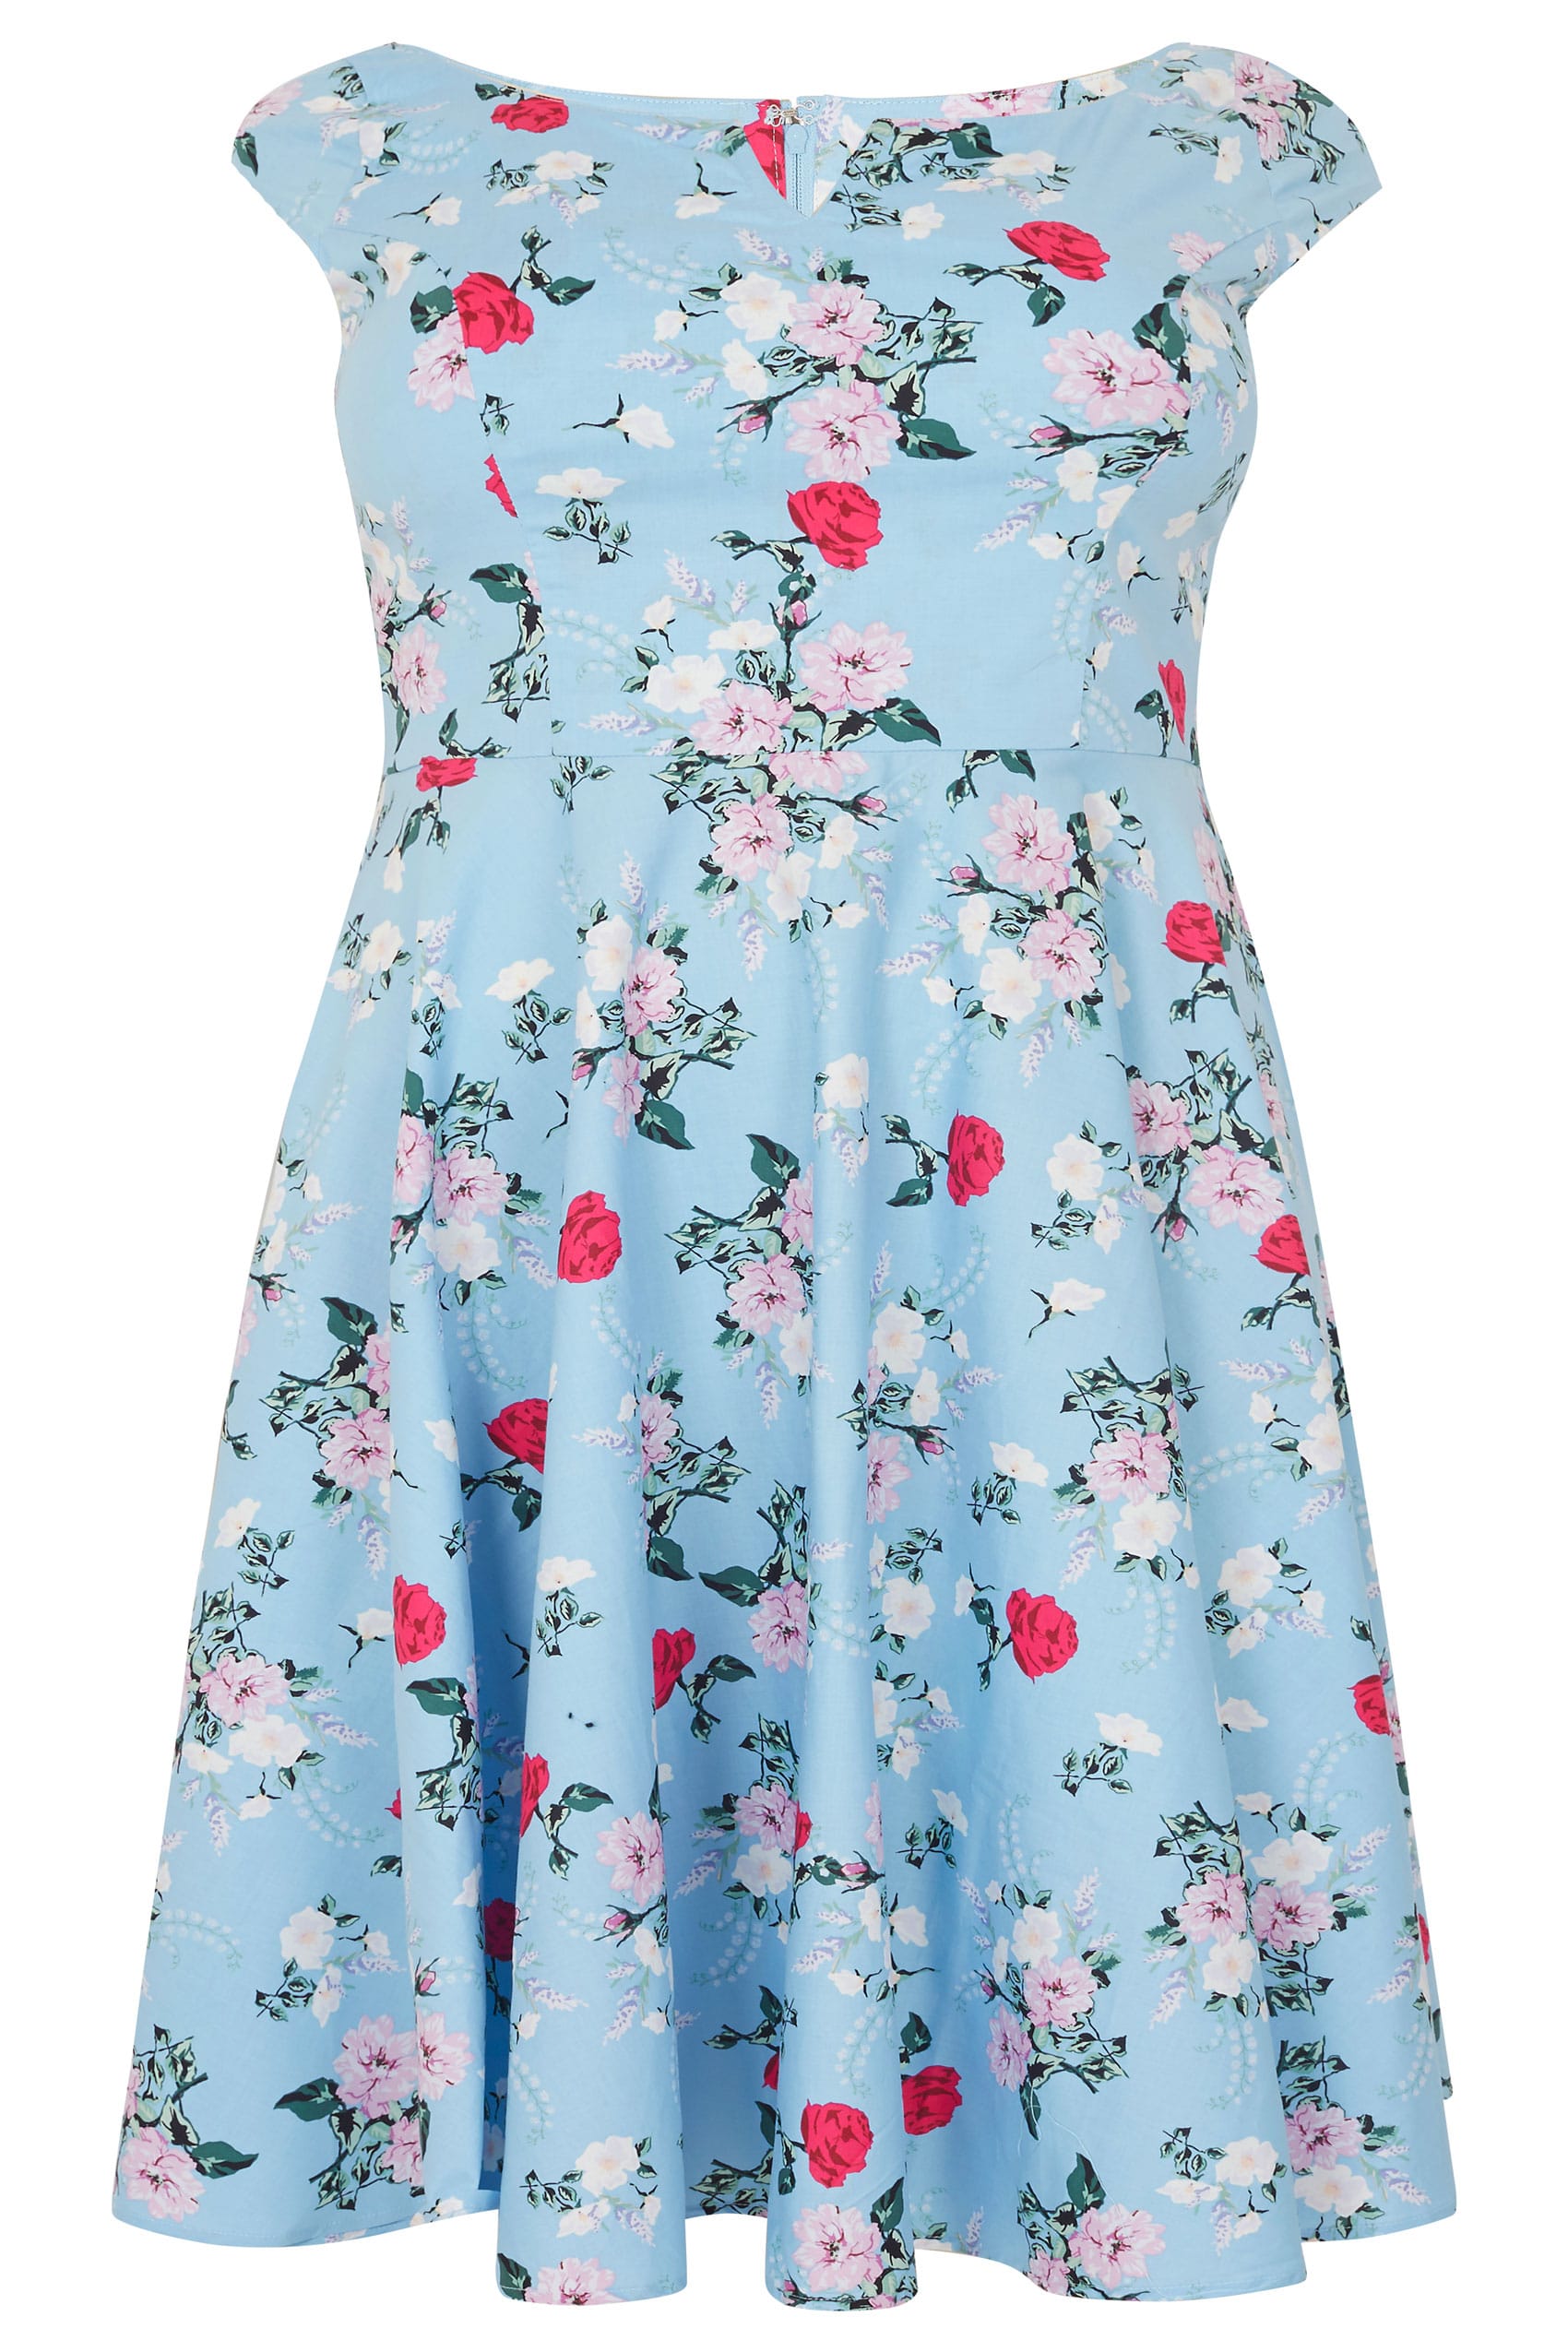 HELL BUNNY Light Blue Floral Print Belina Midi Dress, plus size 16 to 32